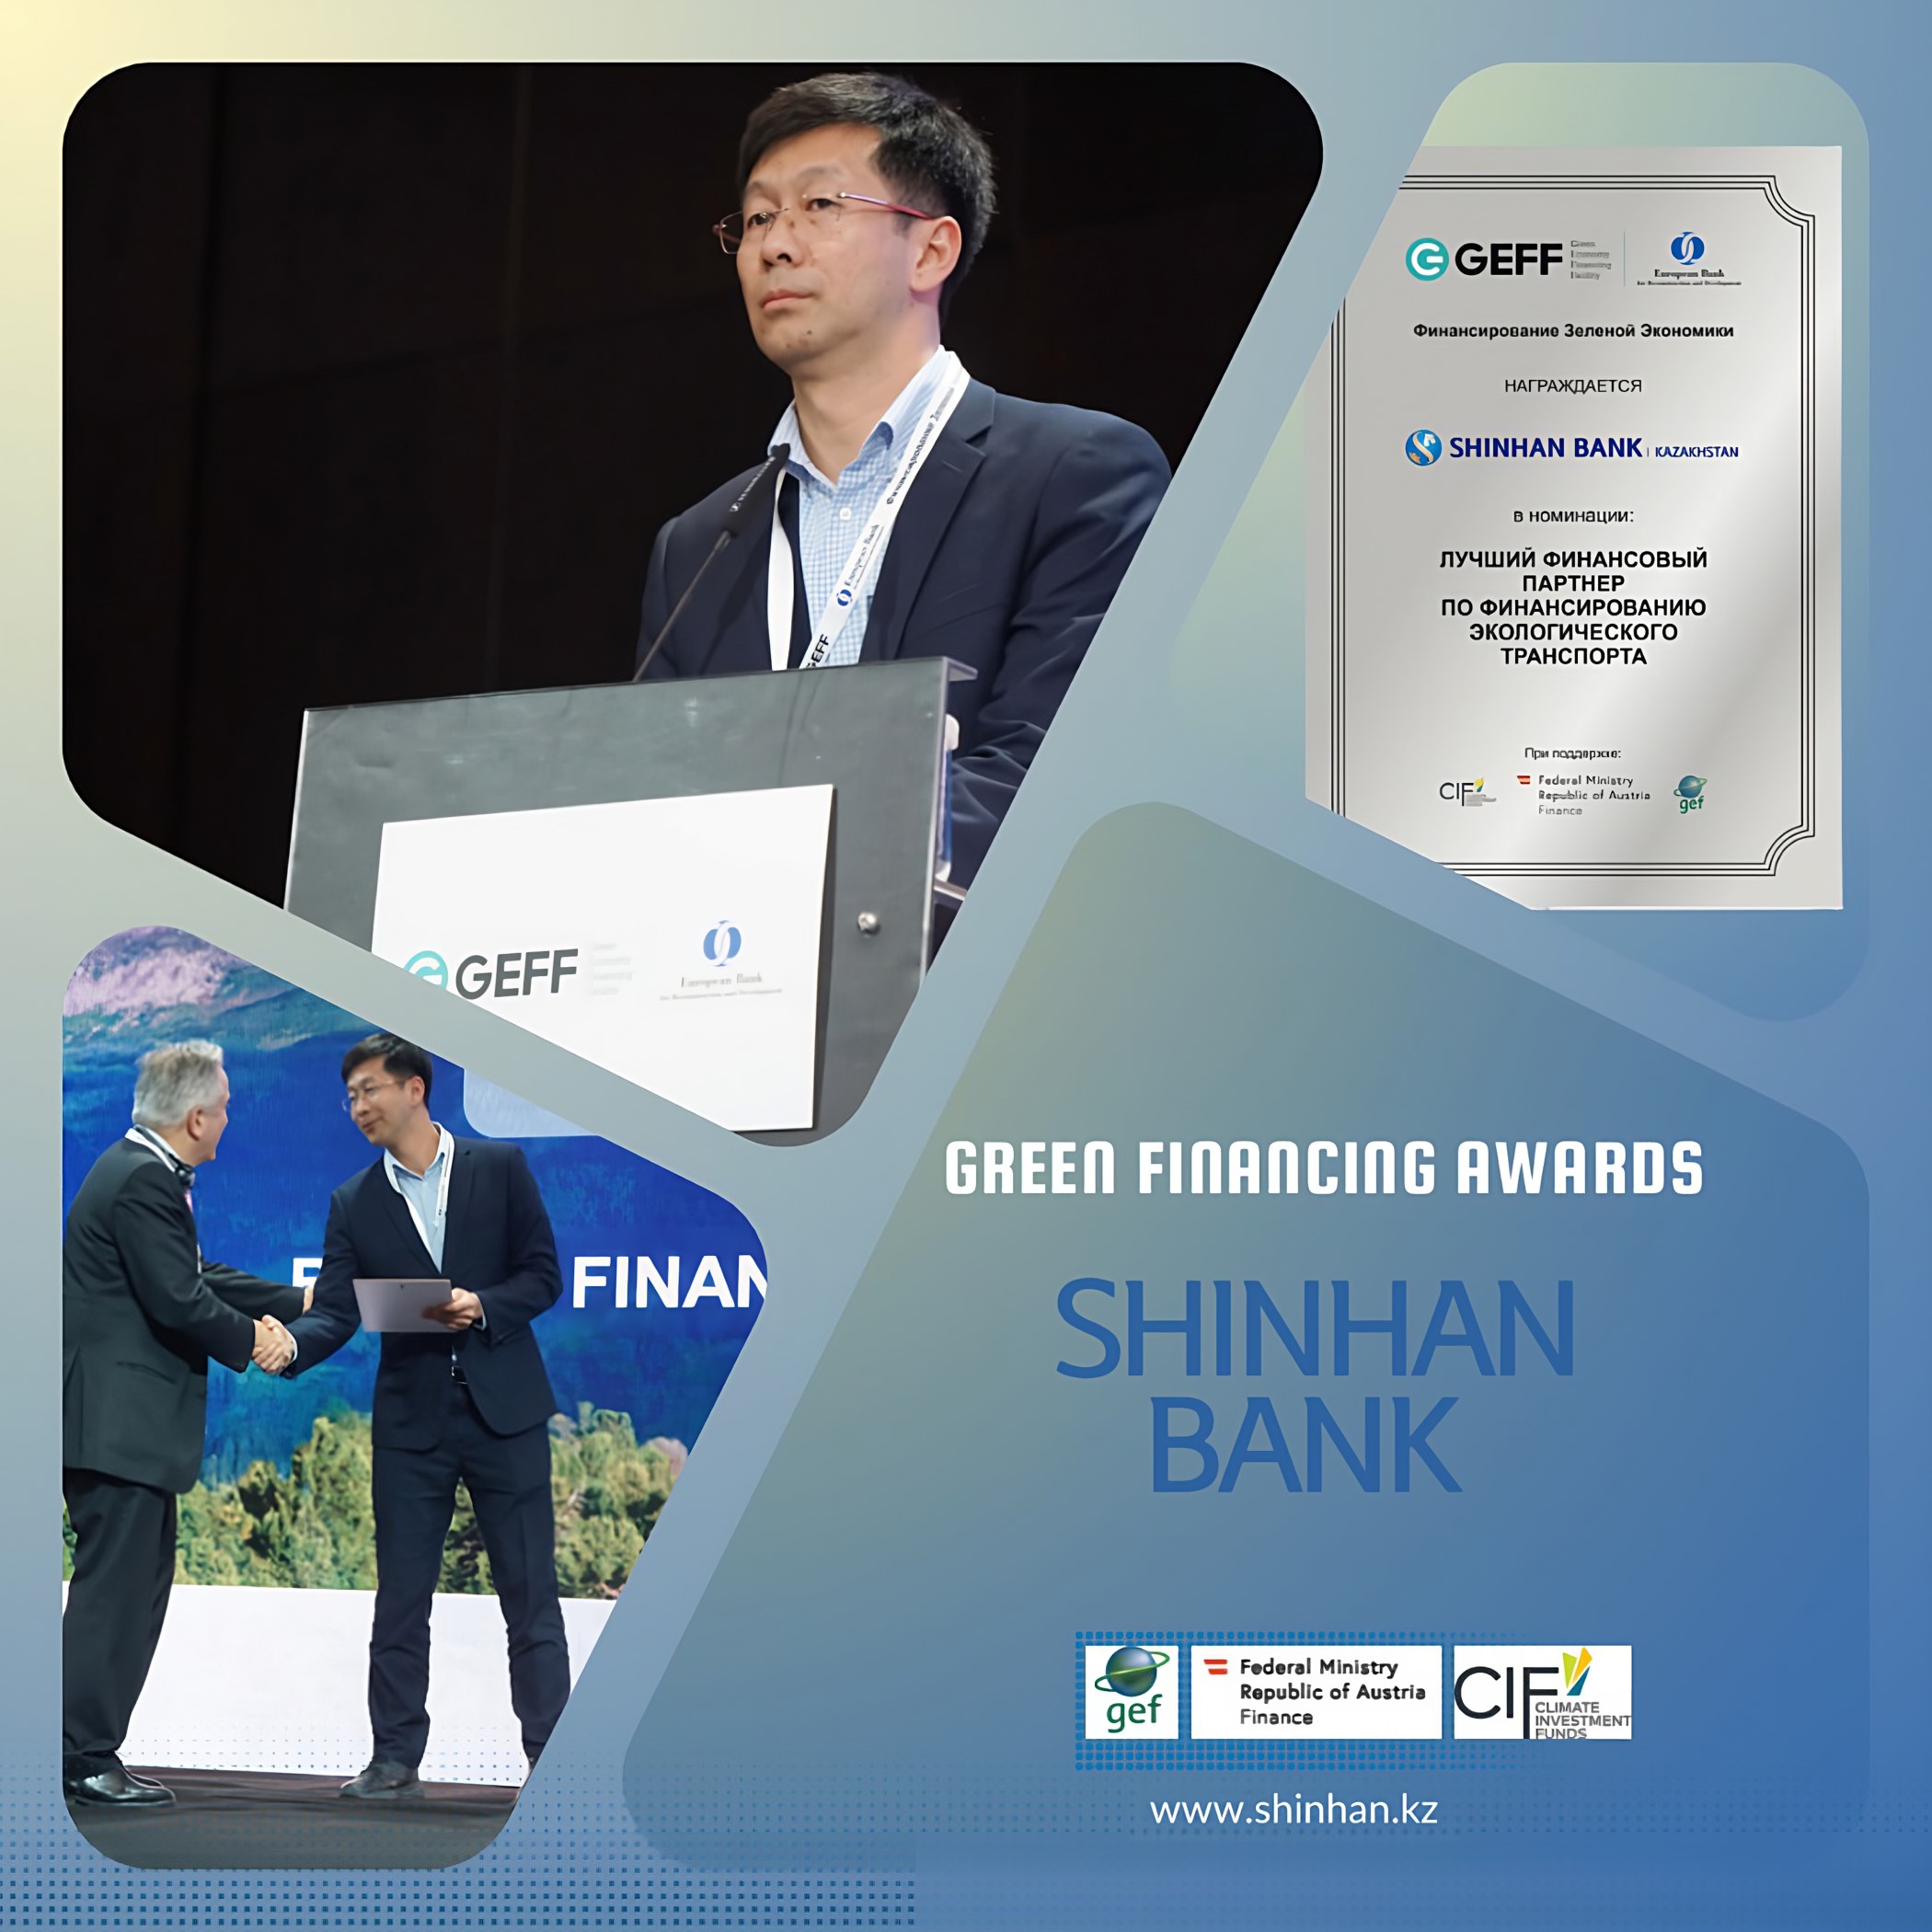 Shinhan Bank Kazakhstan received an award in the nomination 